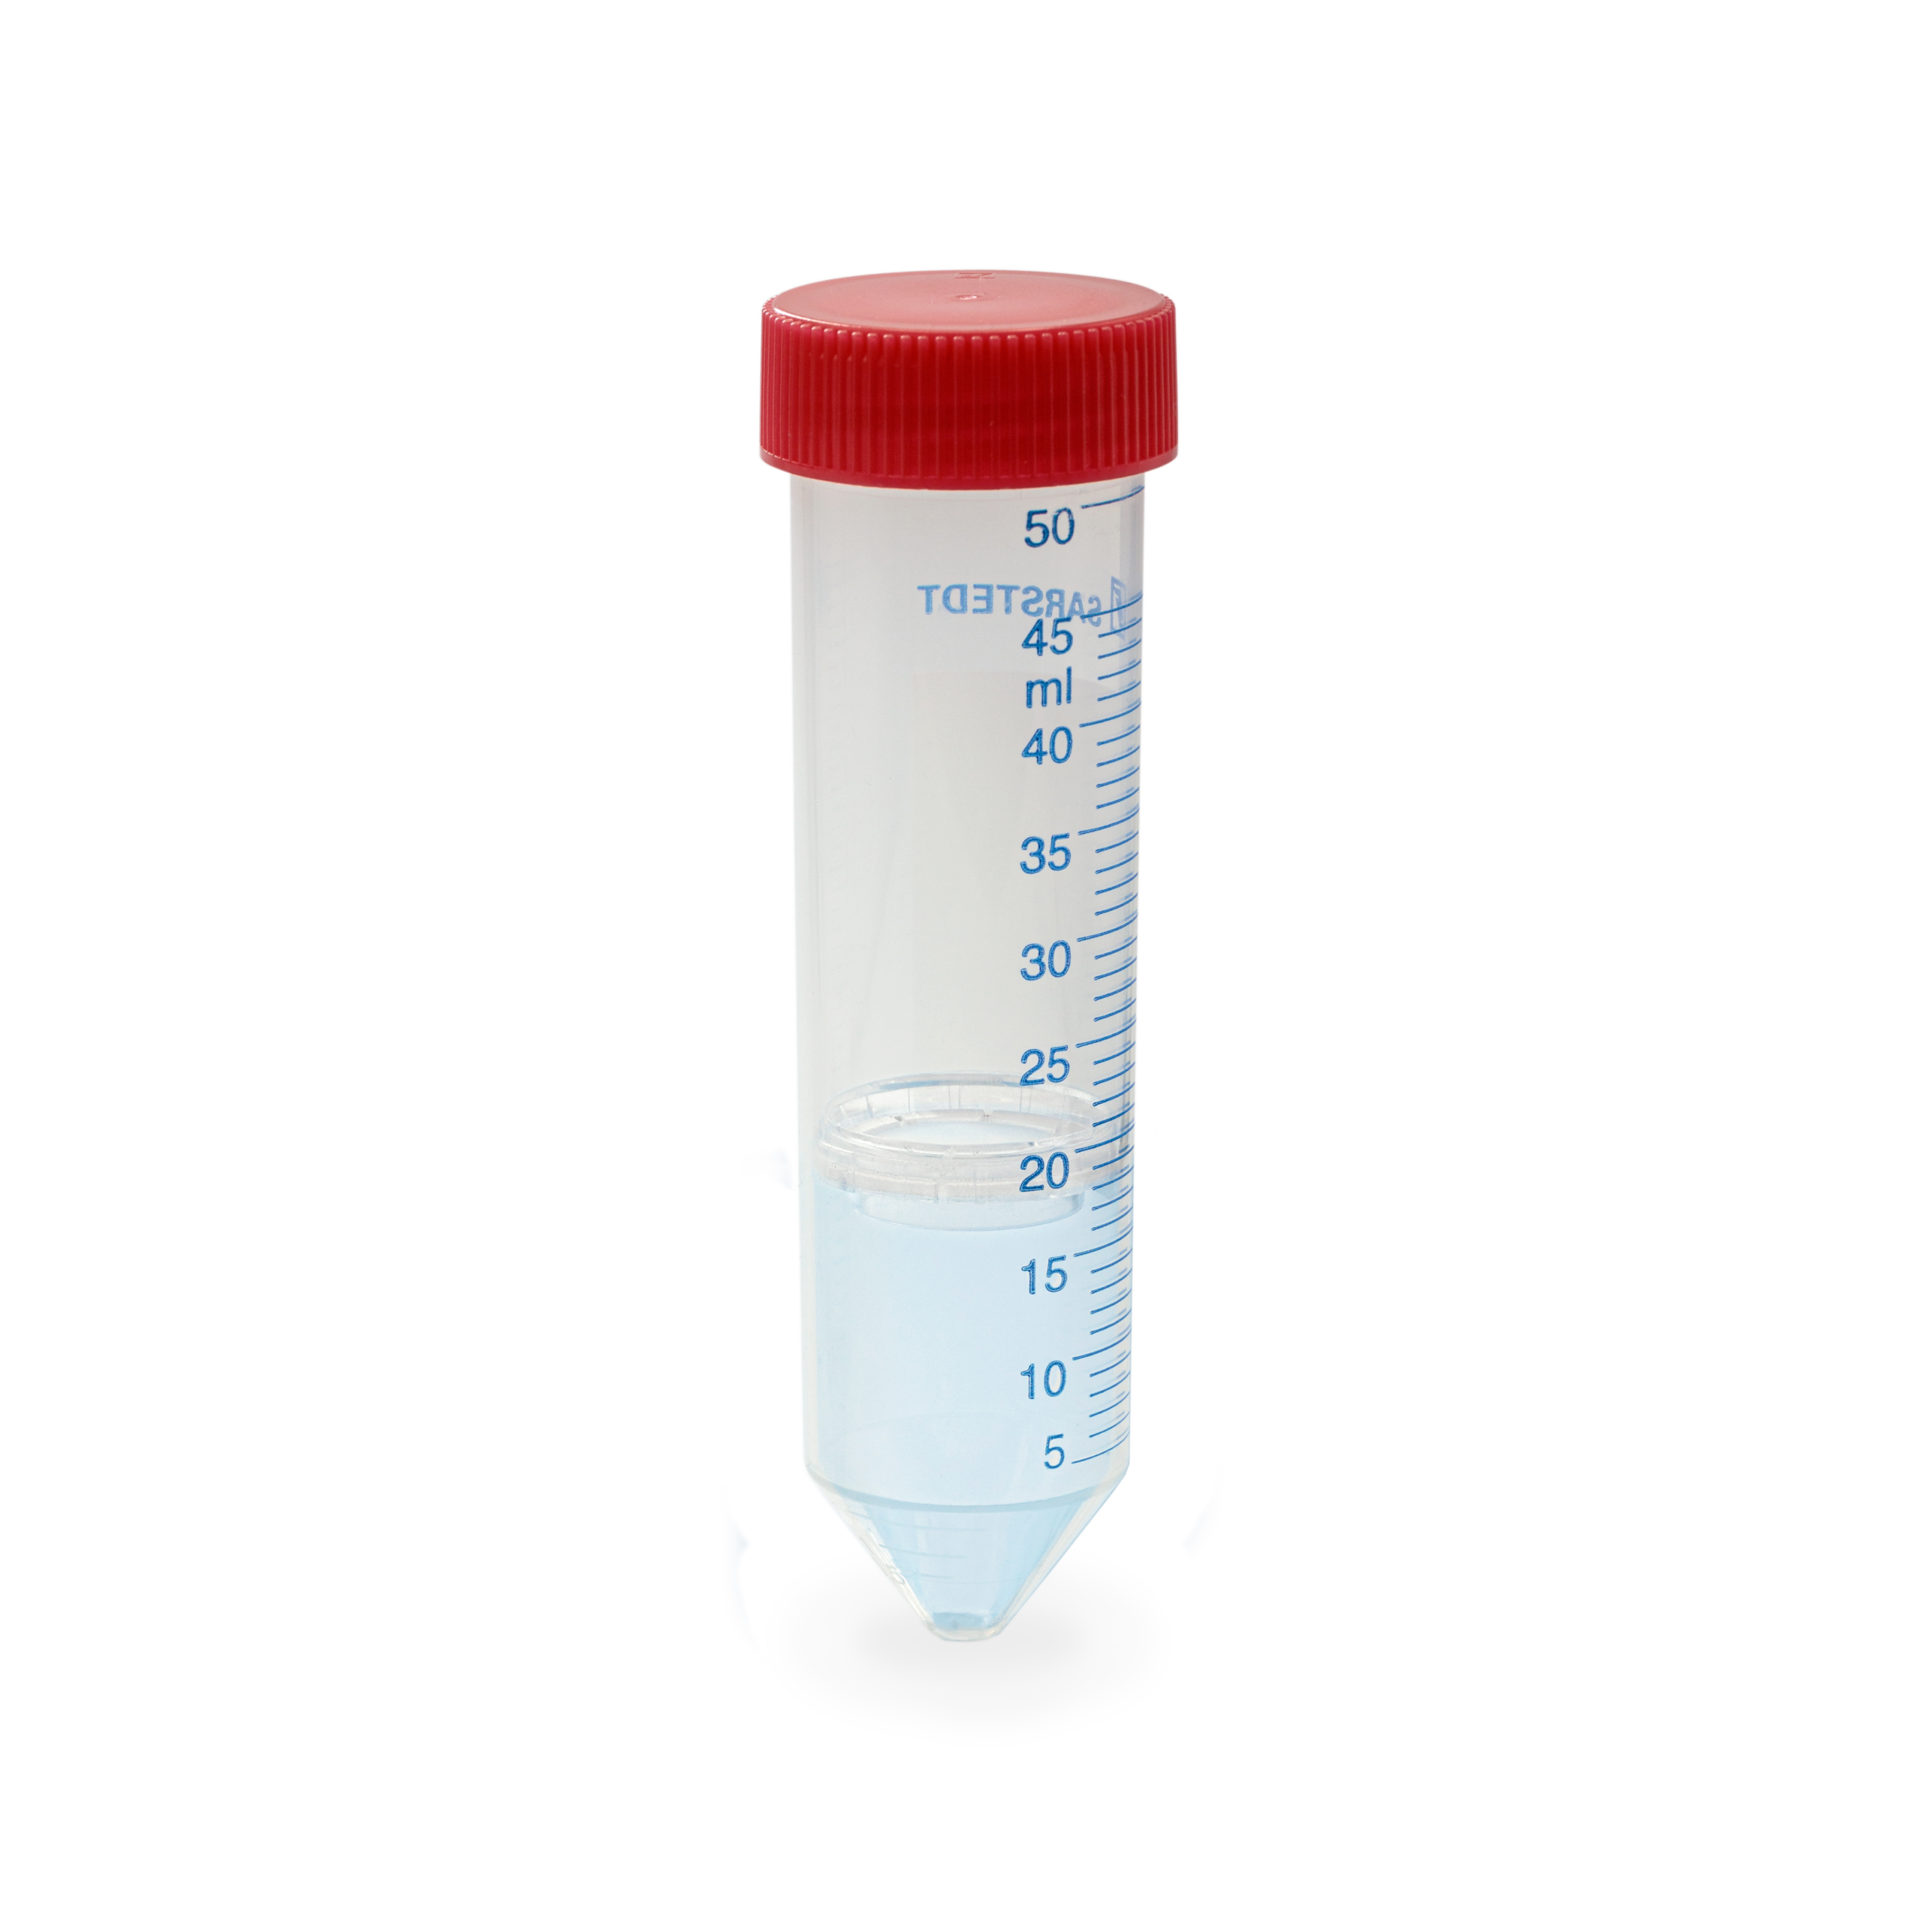 pluriMate ll - 50 ml centrifugation tube, unfilled